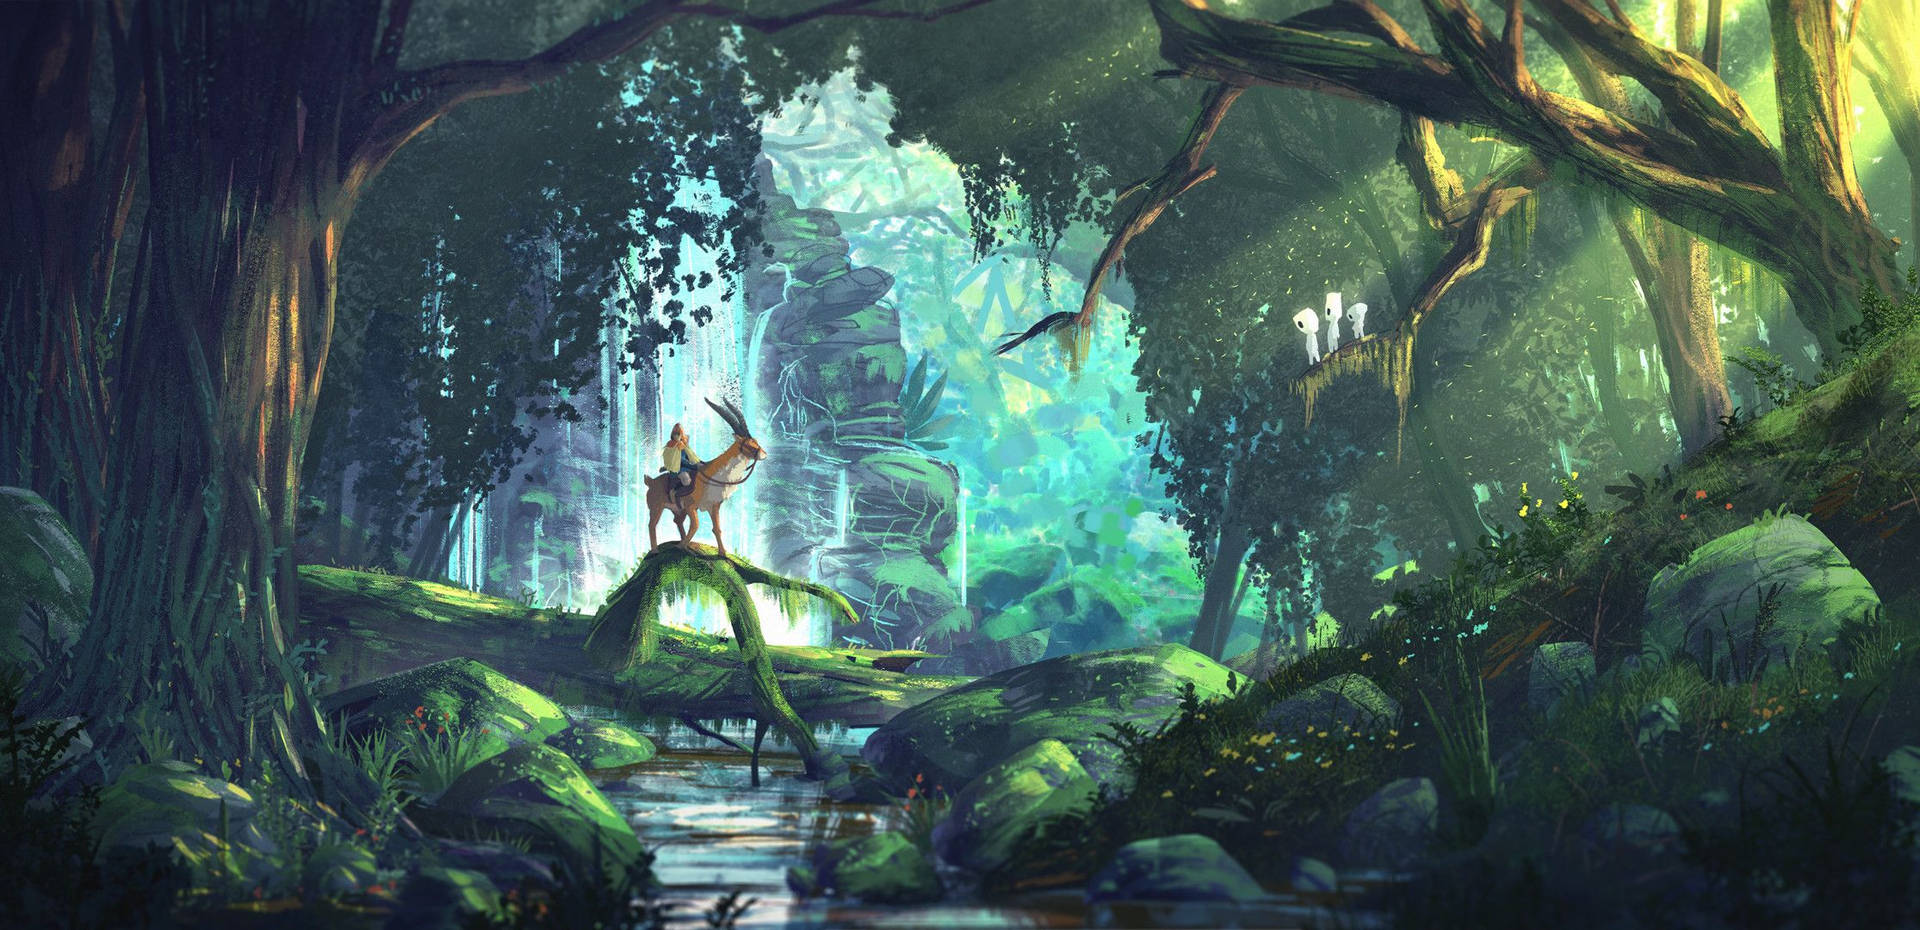 Studio Ghibli 2230X1080 Wallpaper and Background Image